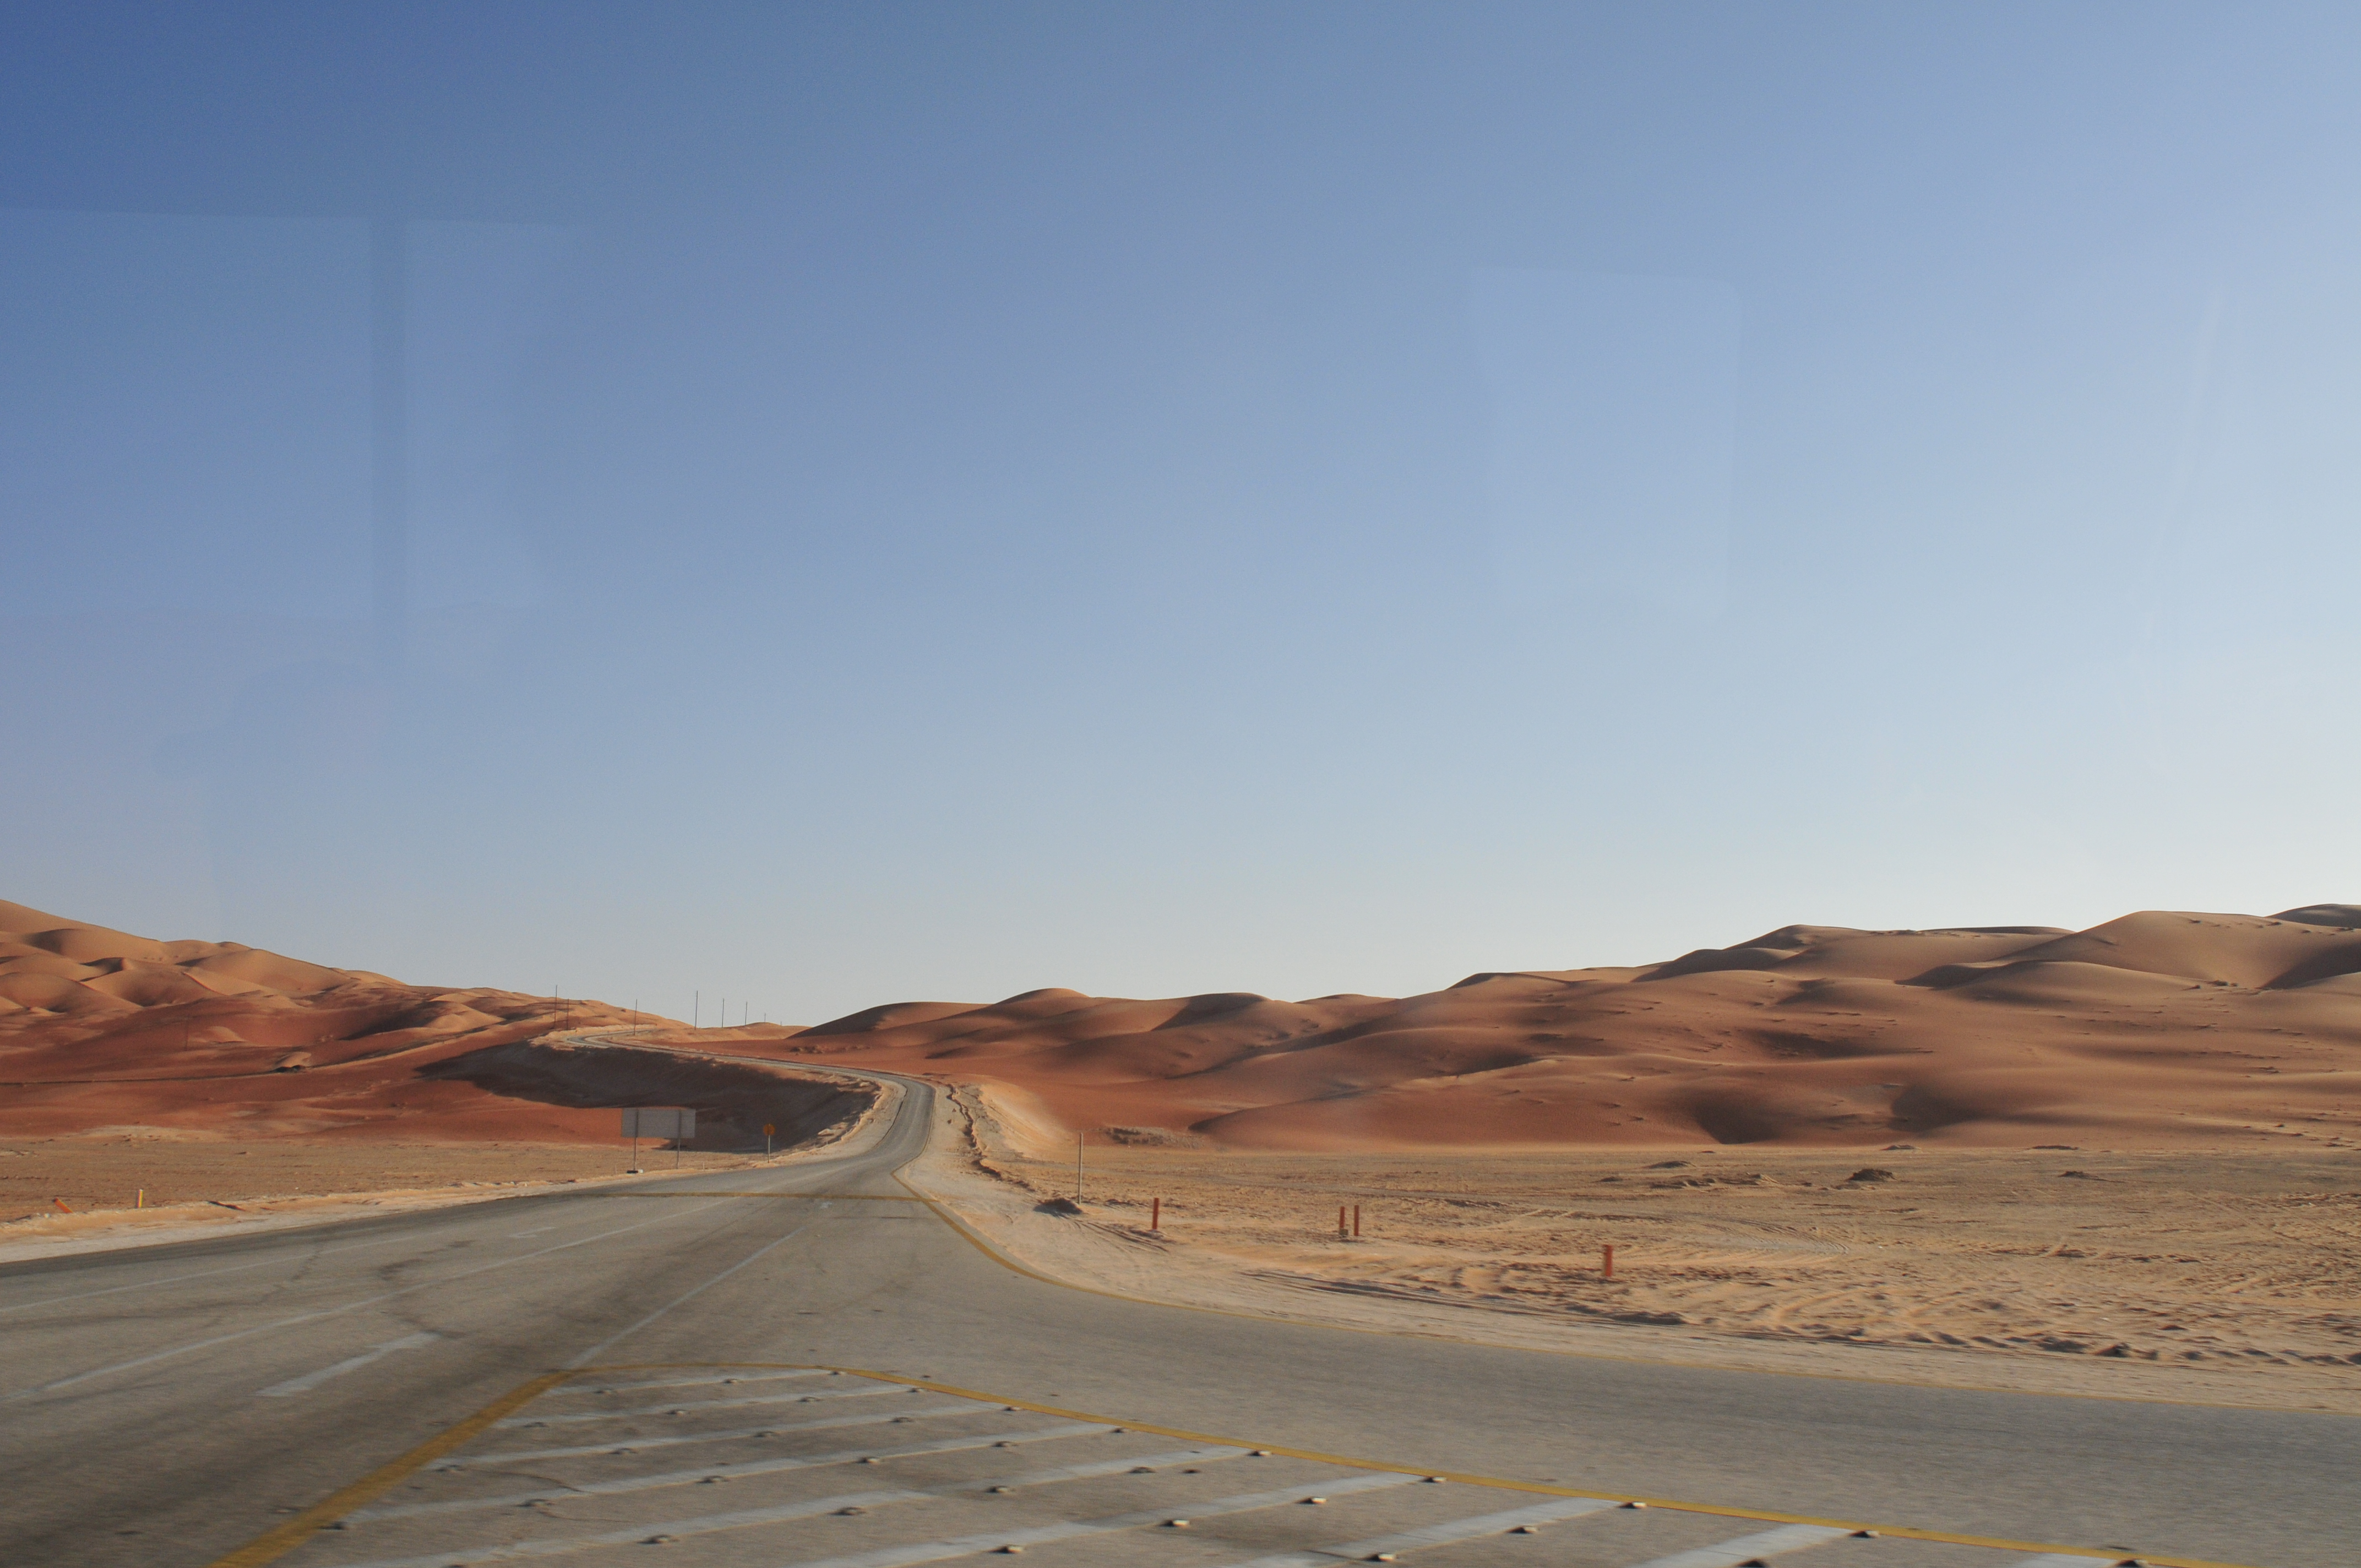 The desert road photo